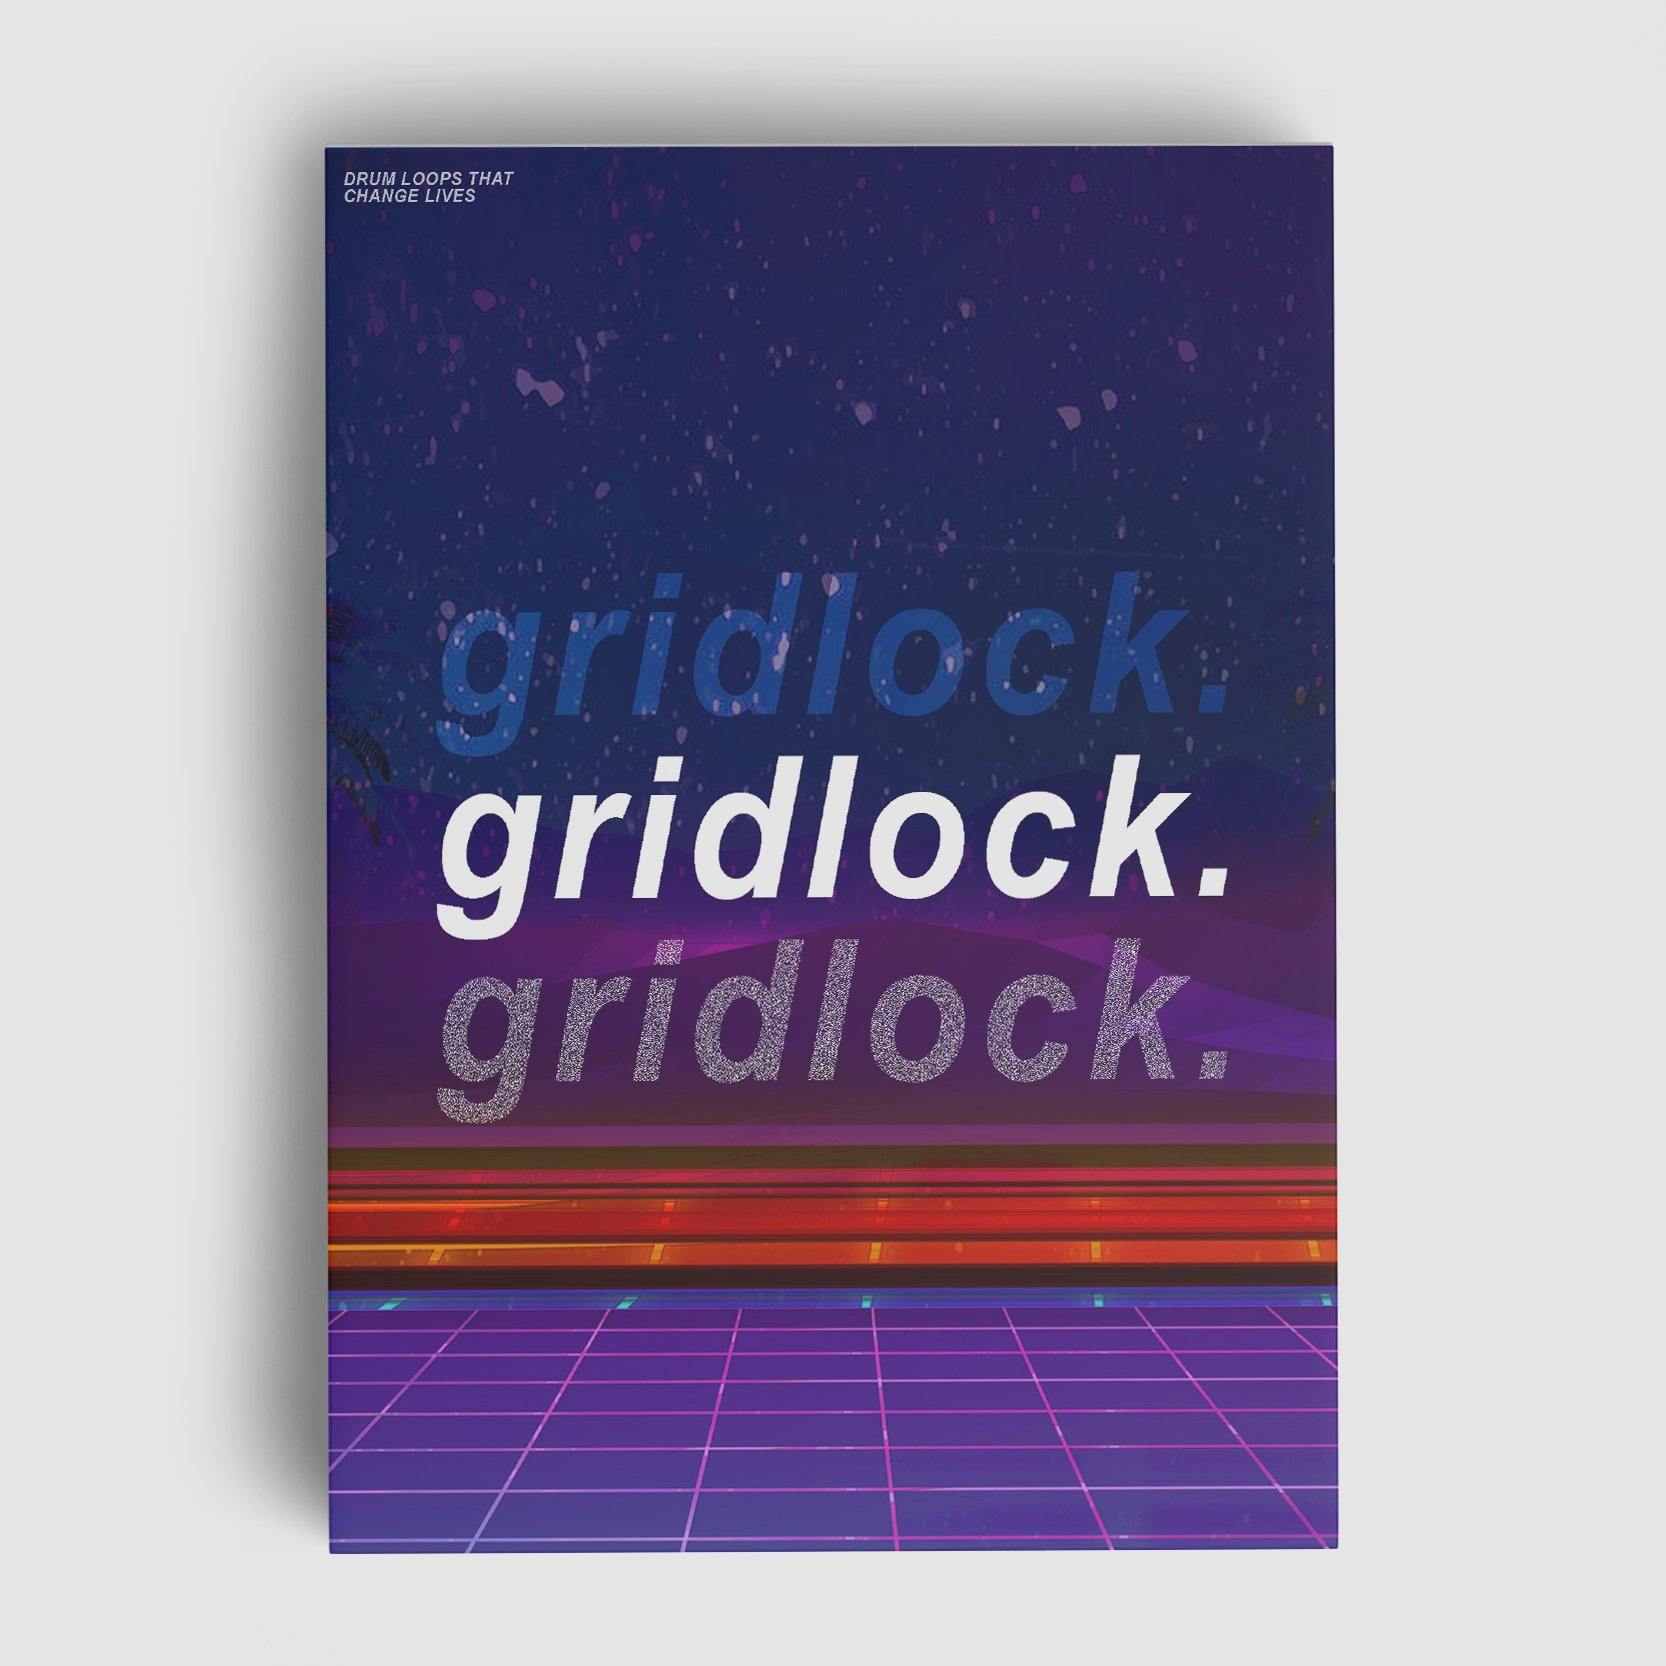 Neon 808s (Free) + Gridlock